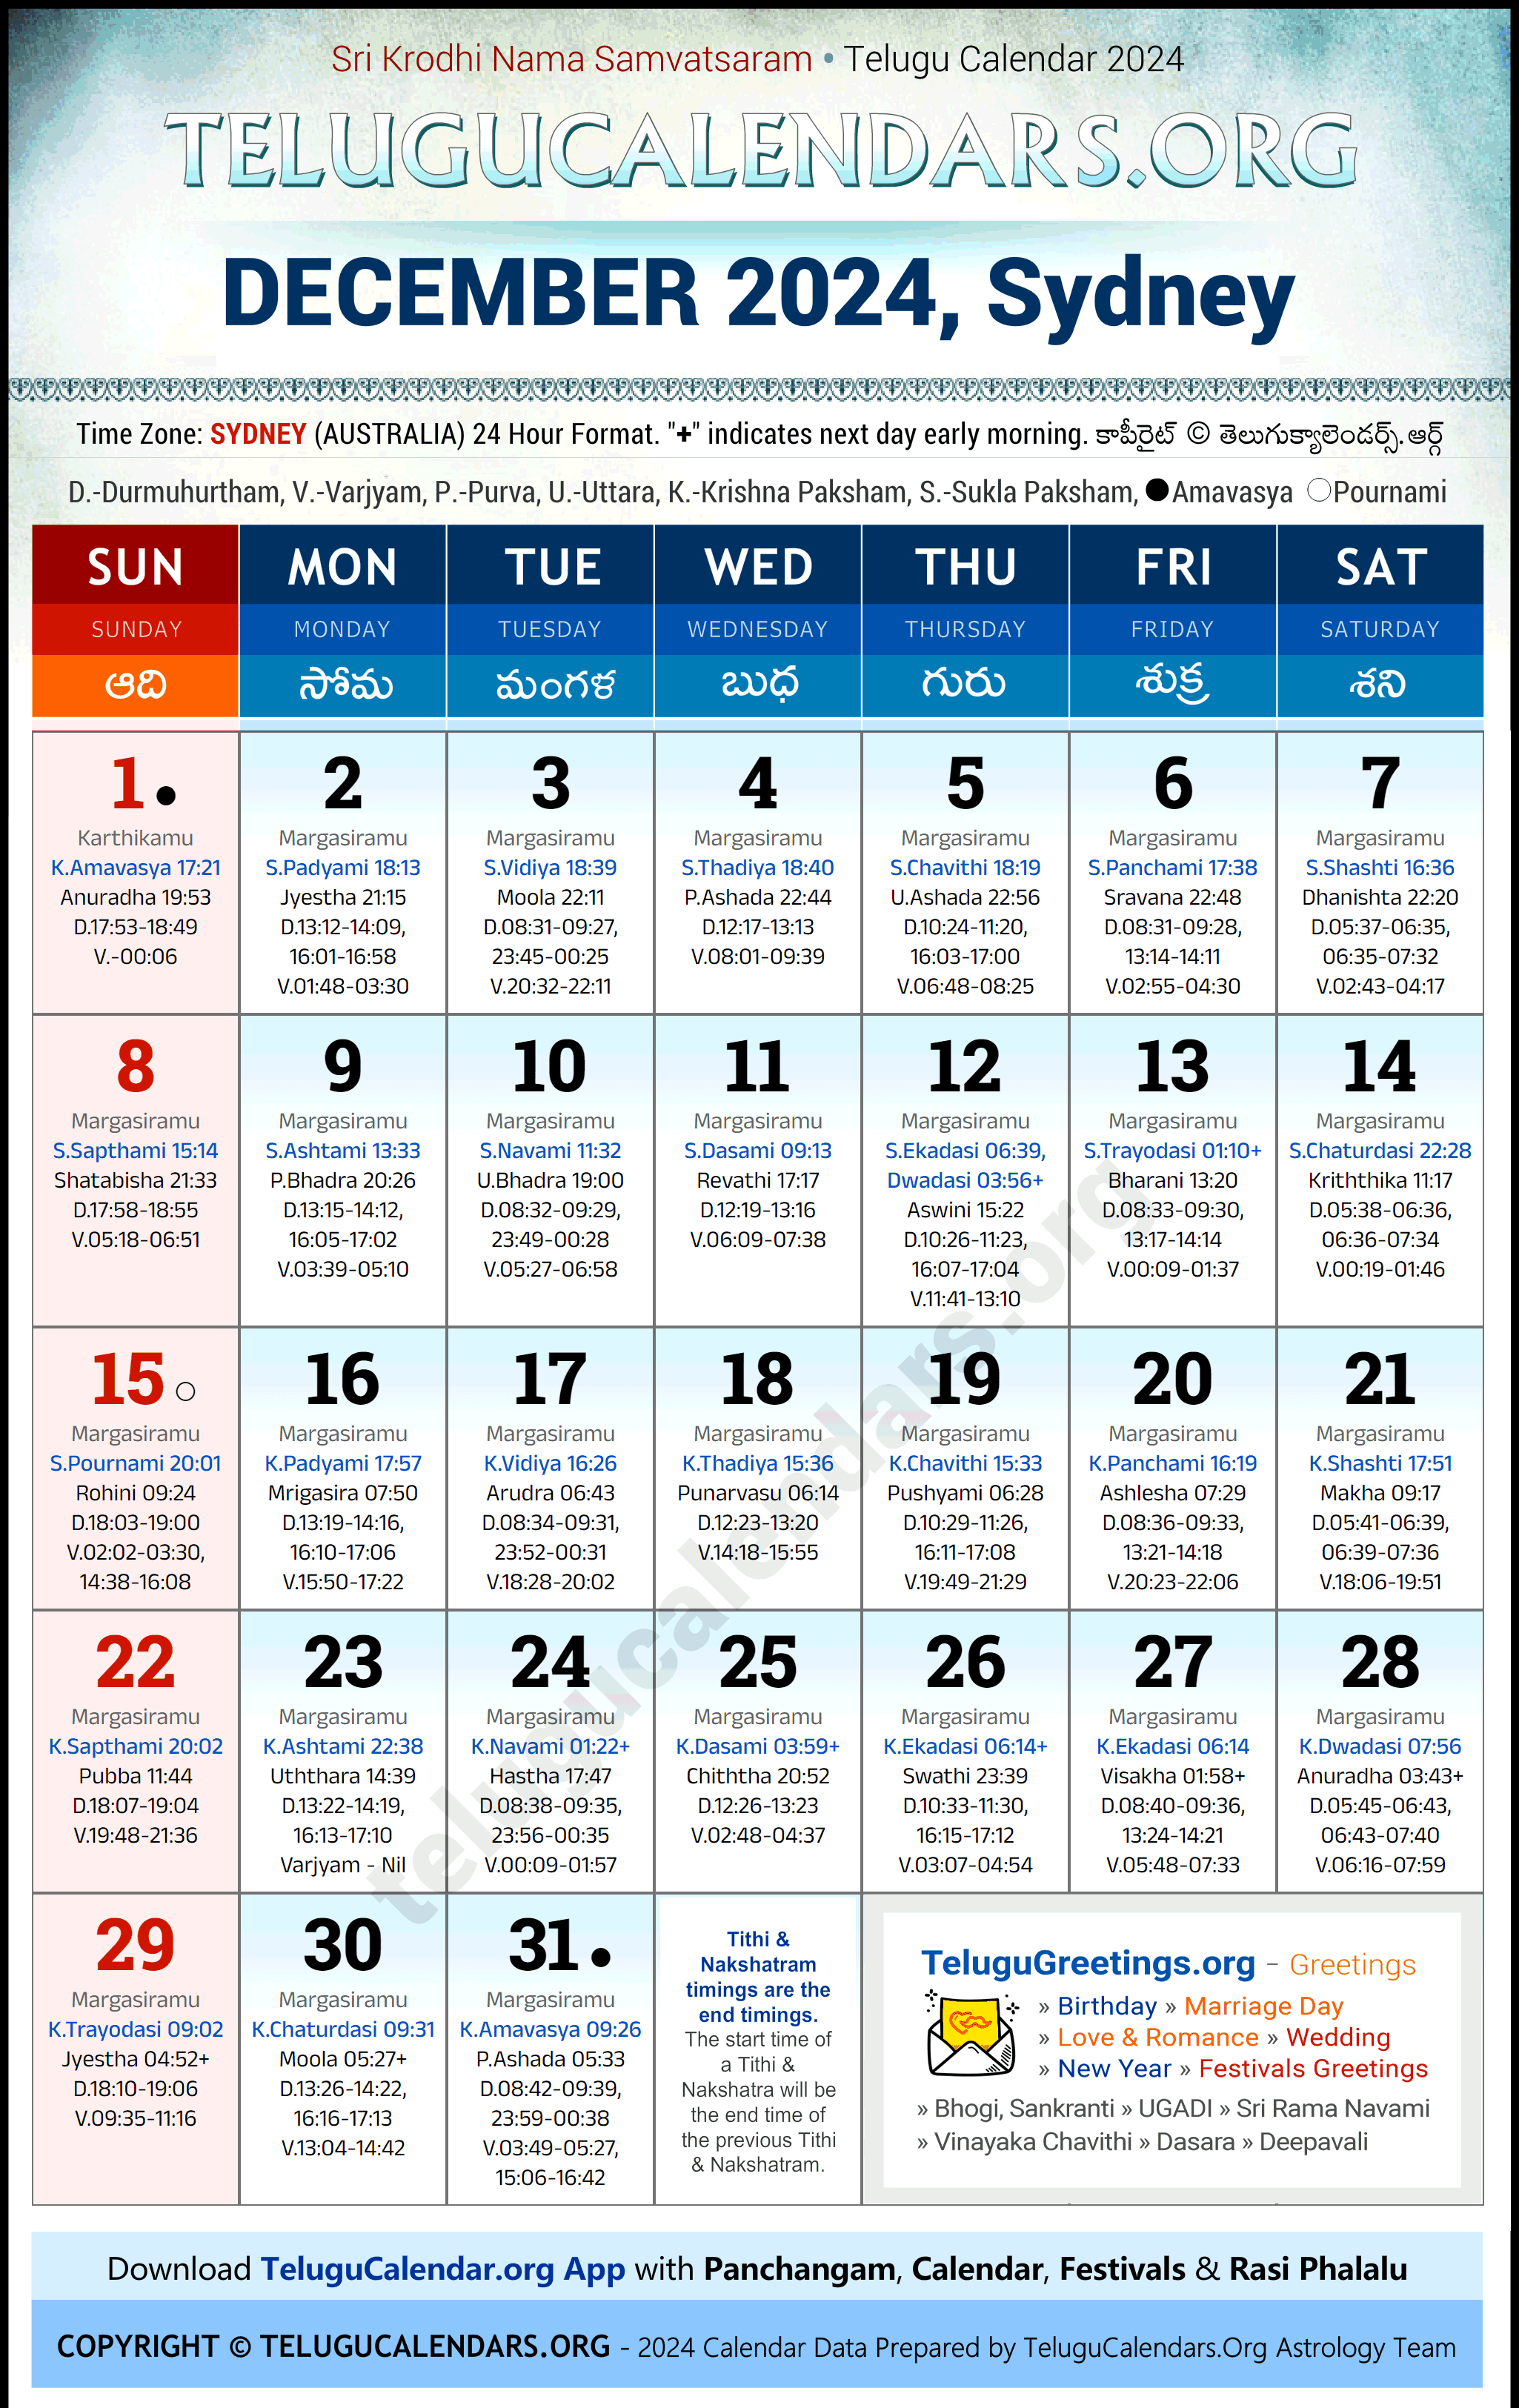 Telugu Calendar 2024 December Festivals for Sydney